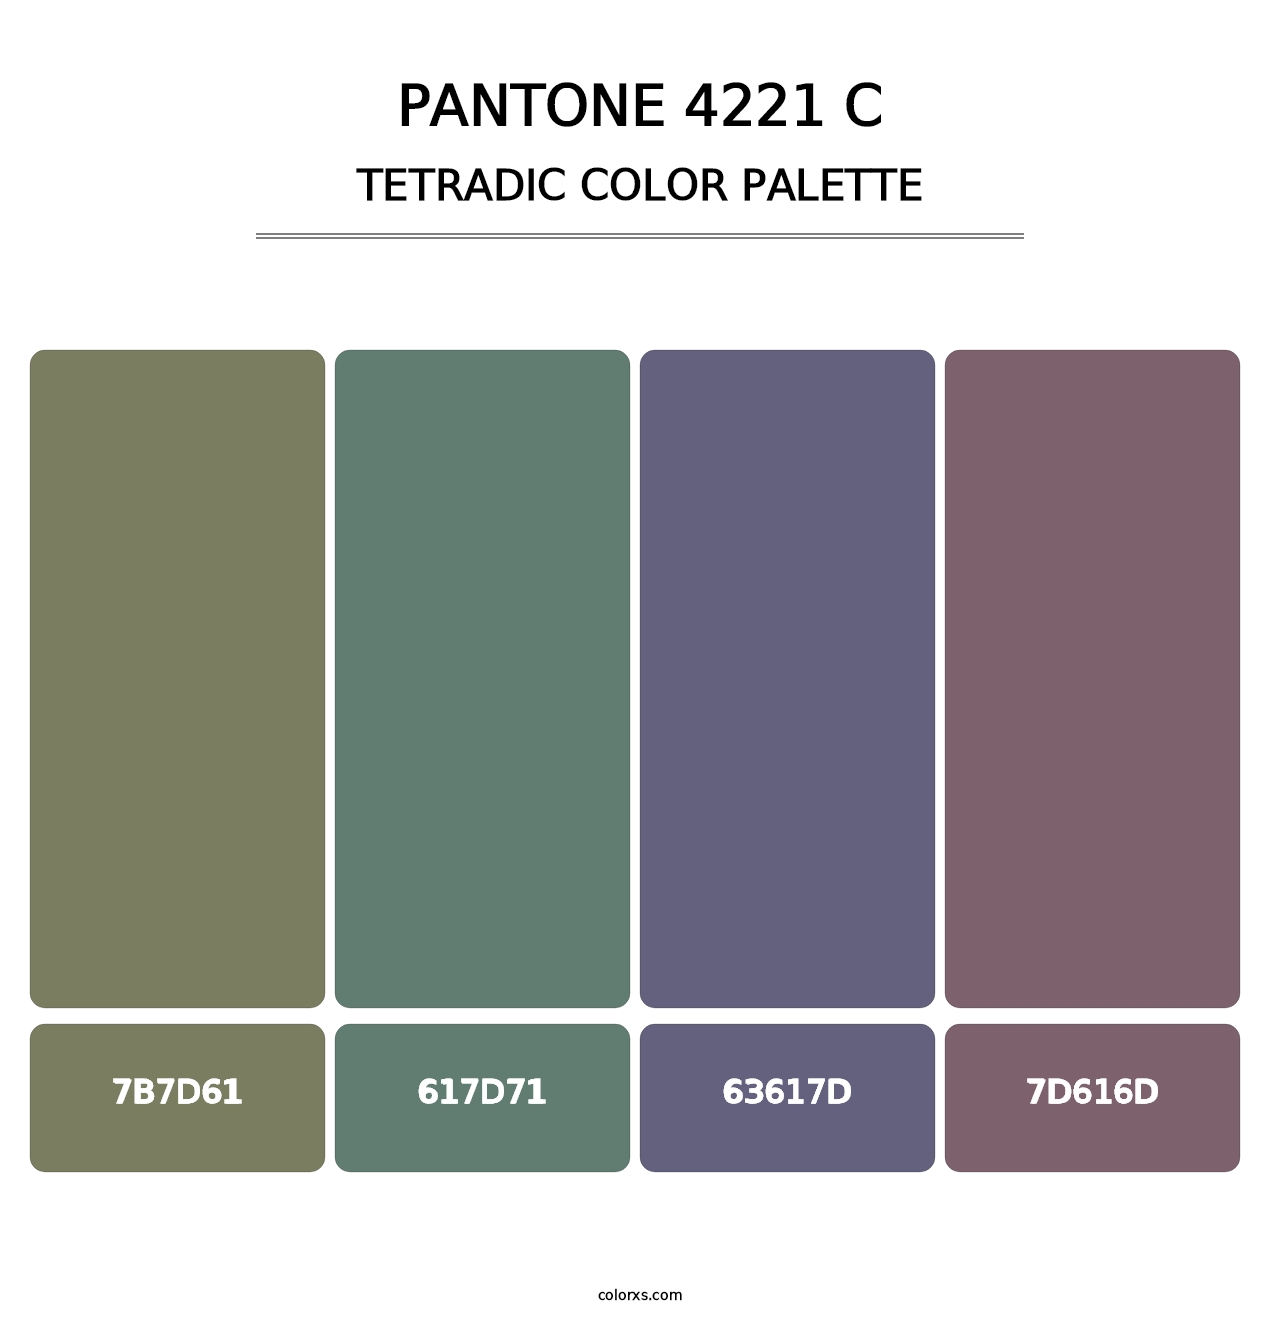 PANTONE 4221 C - Tetradic Color Palette